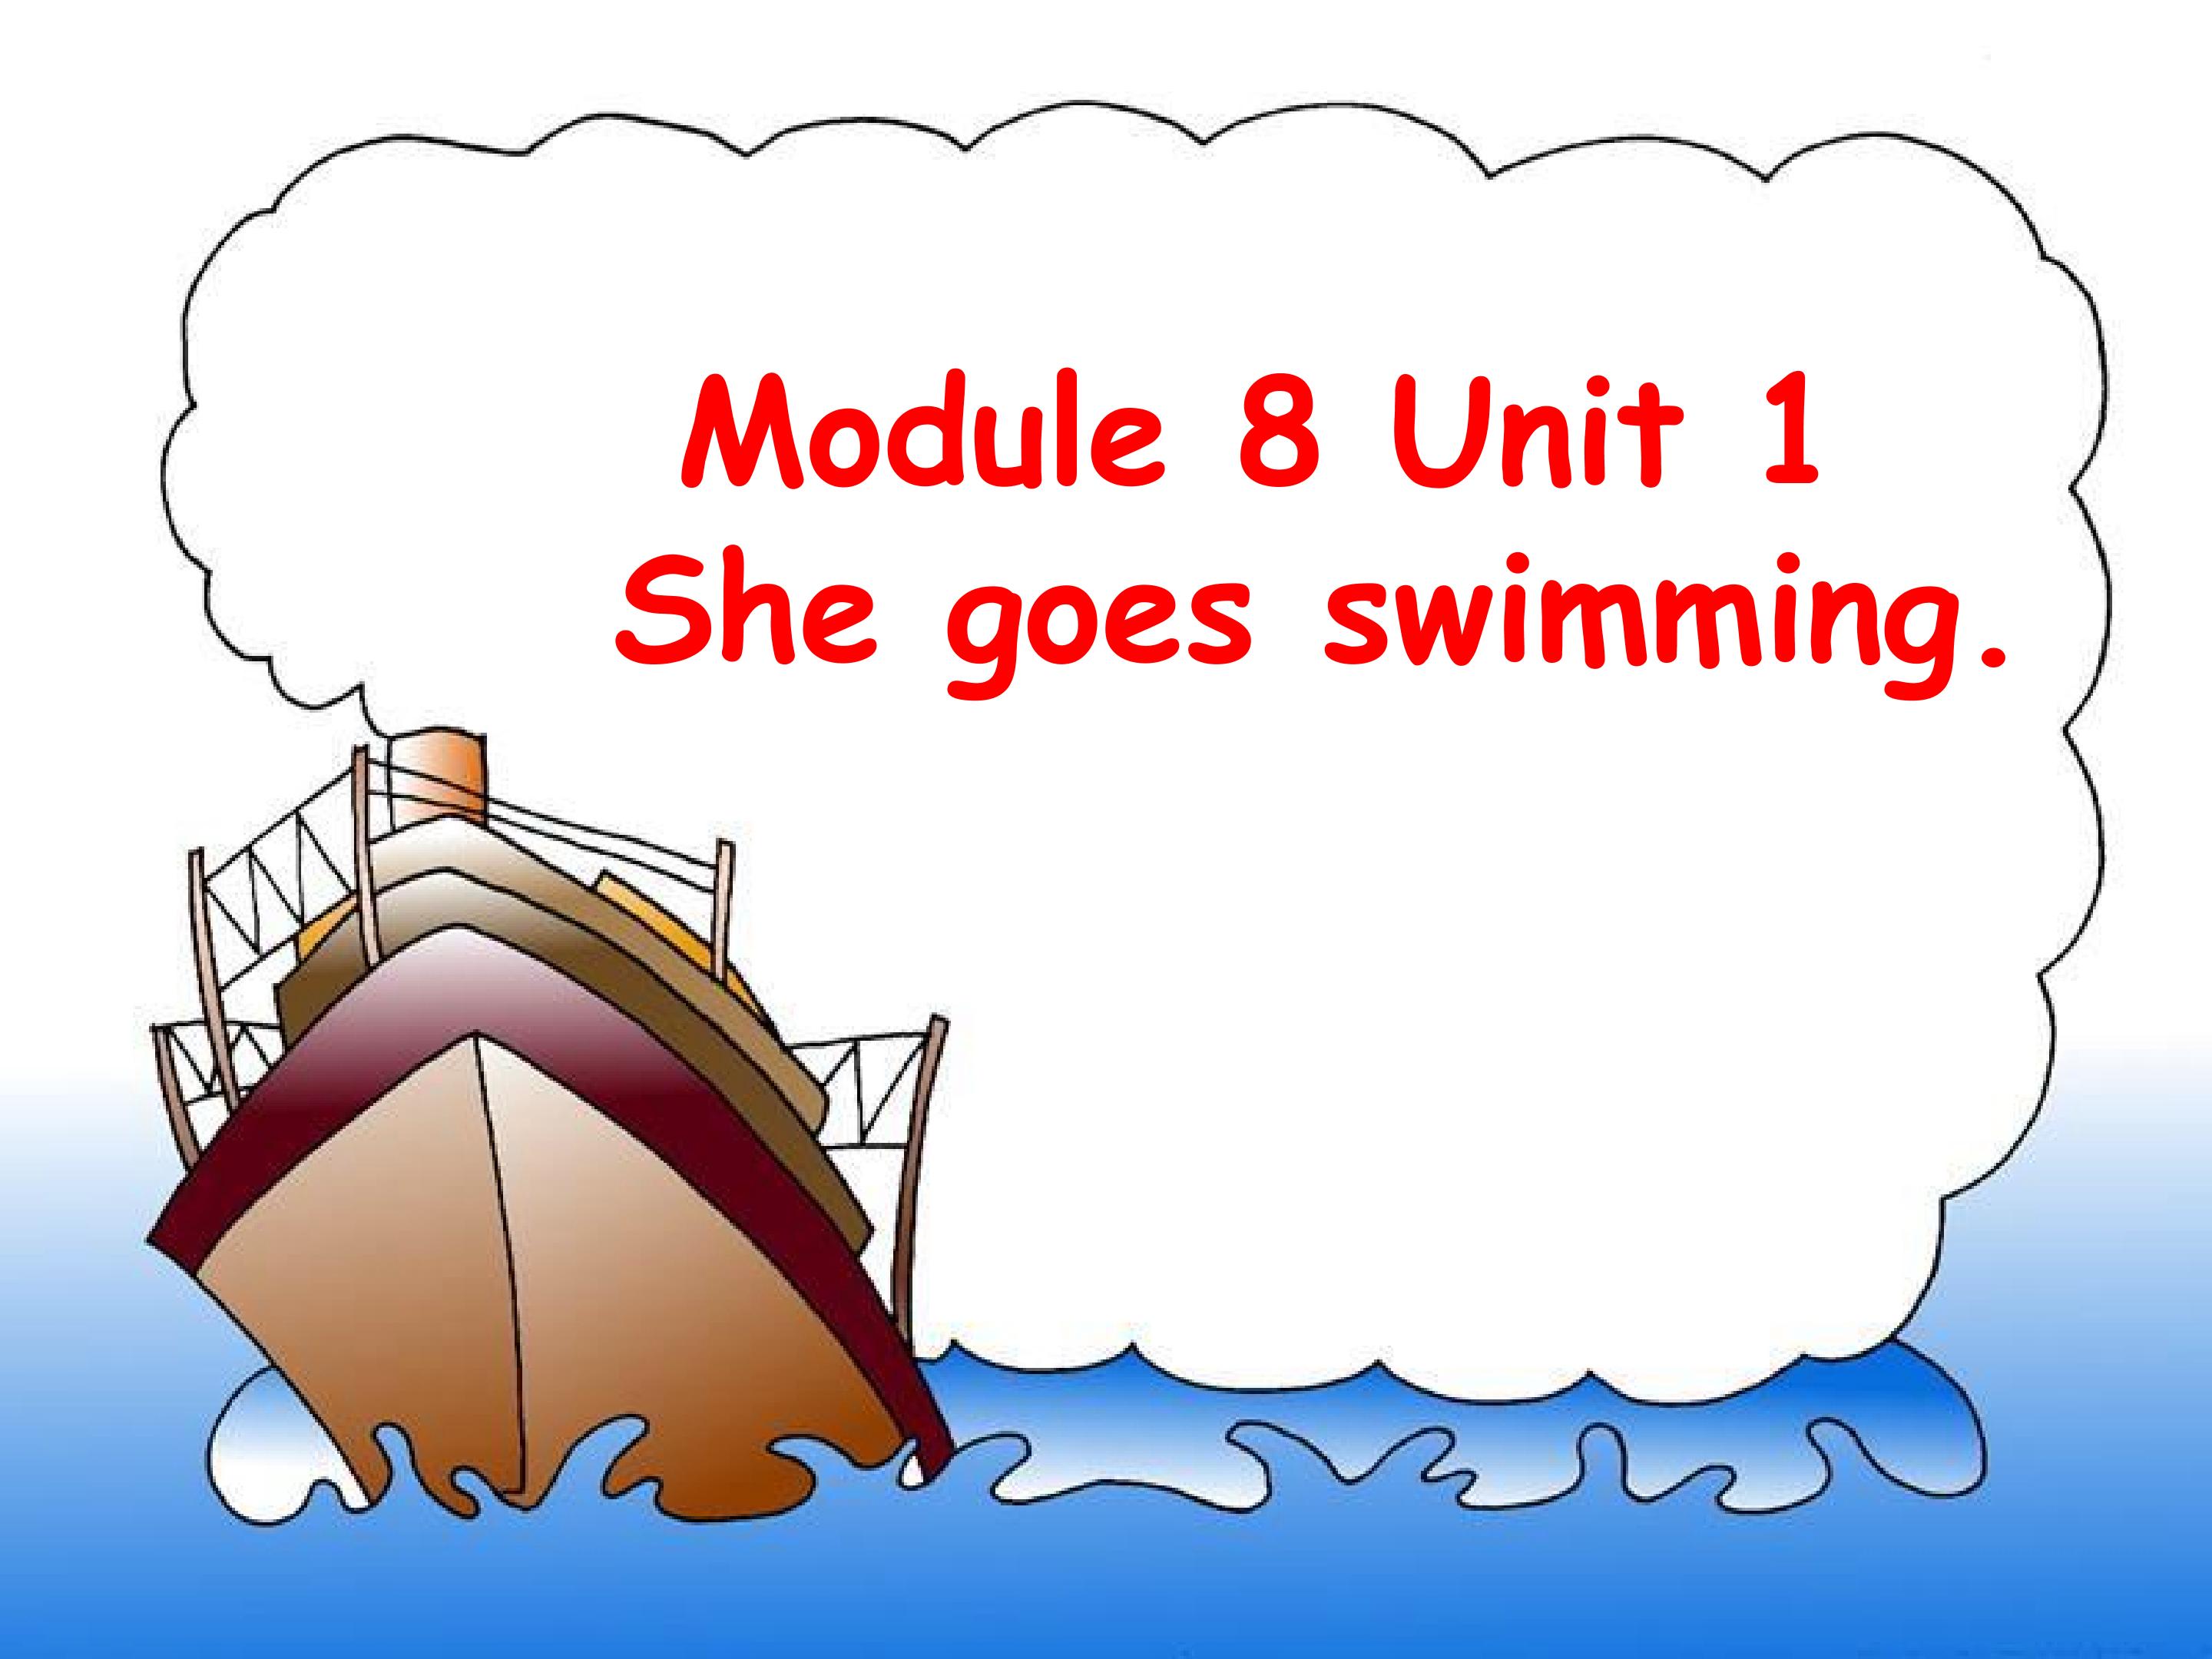 Module 8 Unit 1 She goes swimming.